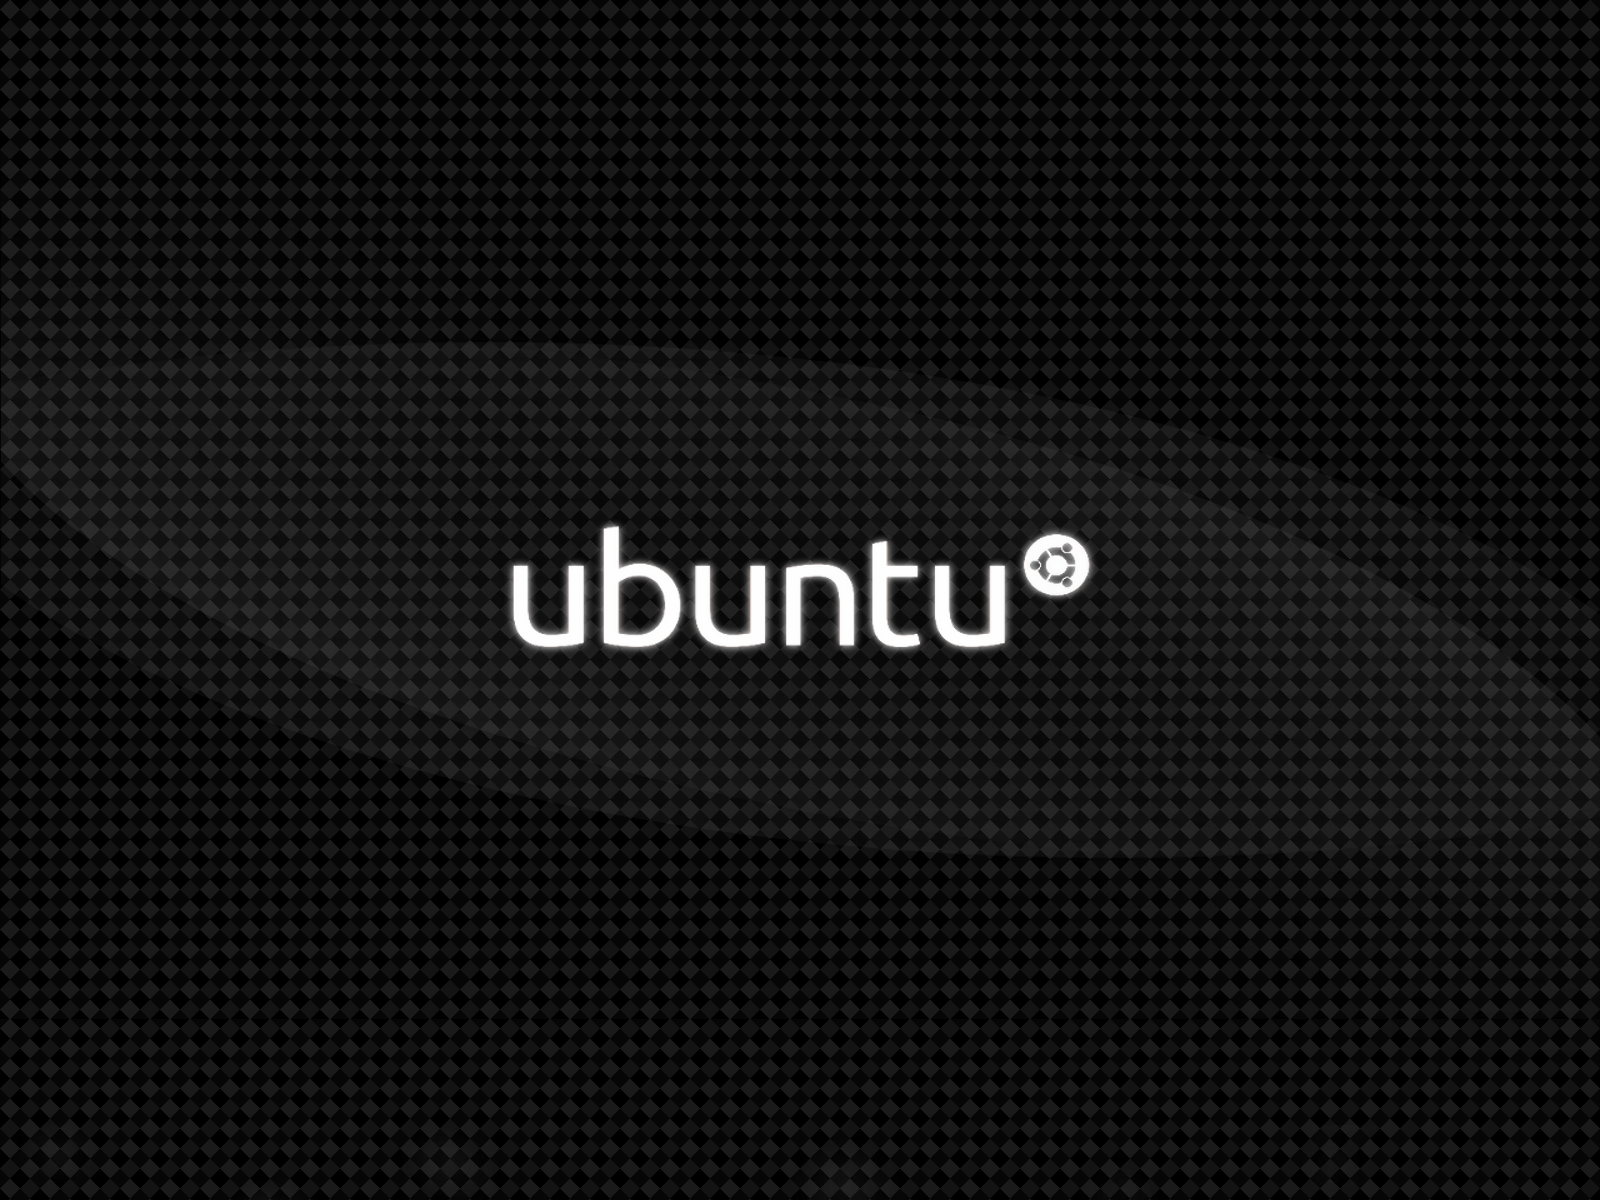 Ubuntu Diamond Wallpaper Pack by LIB53 420x315 Ubuntu 1600x1200